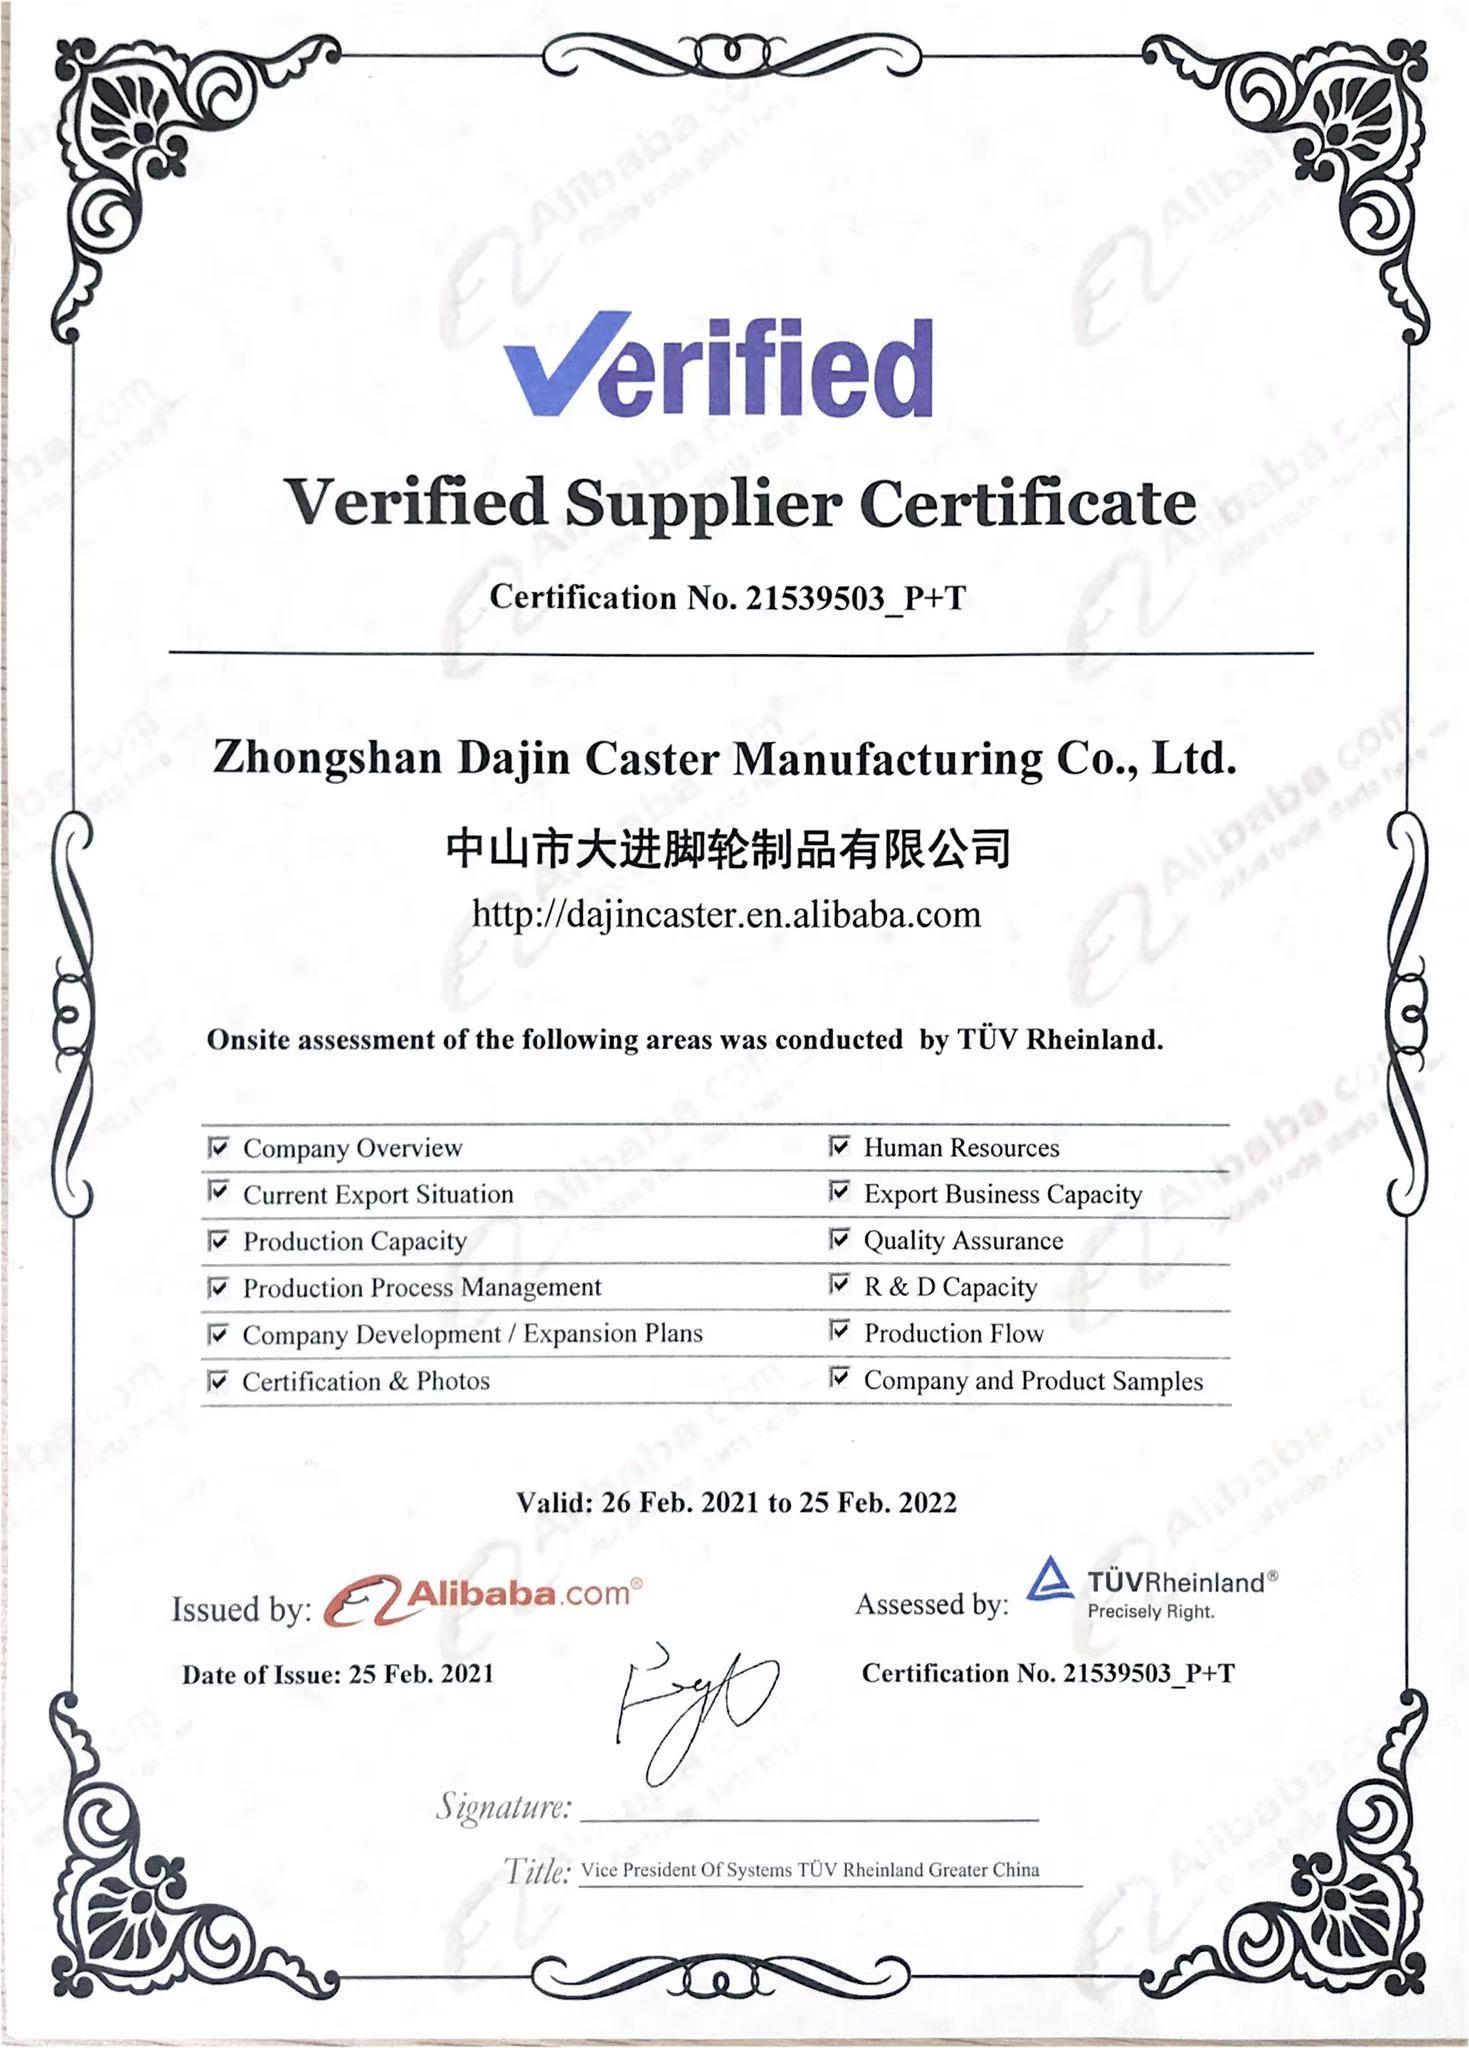 TUV verified supplier